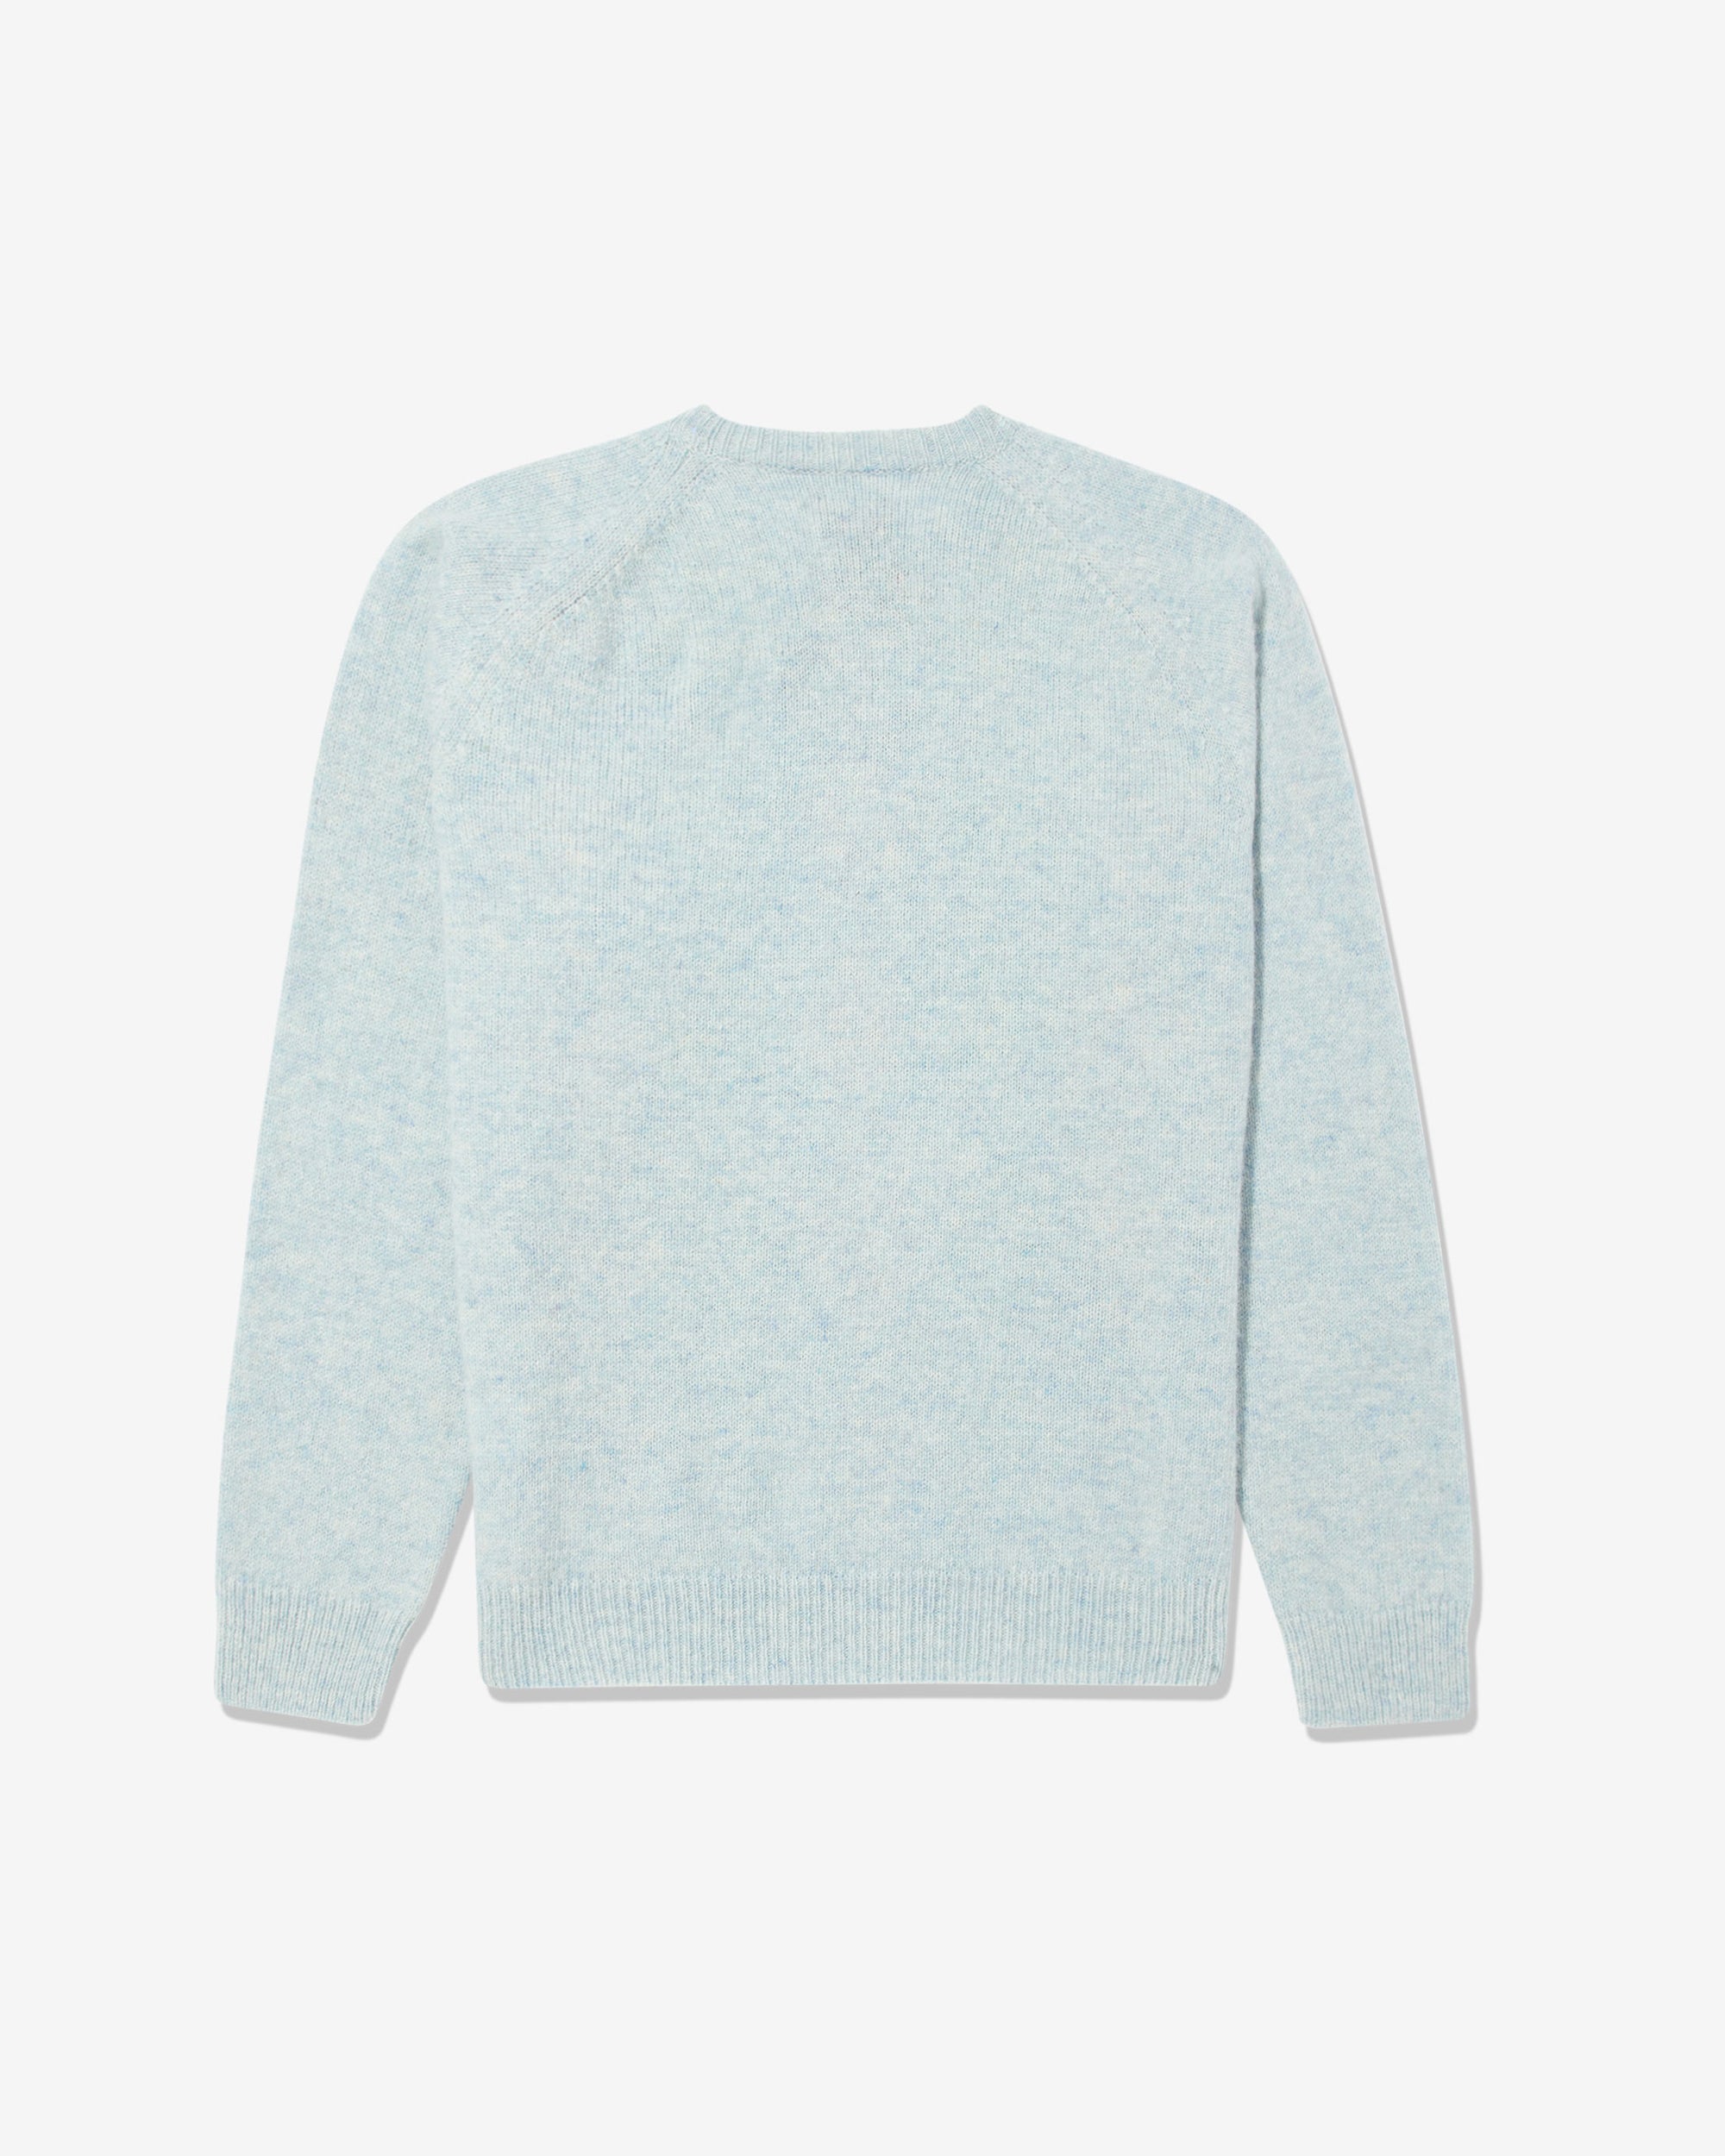 Argyle Sweater - Buy Argyle Sweater online in India